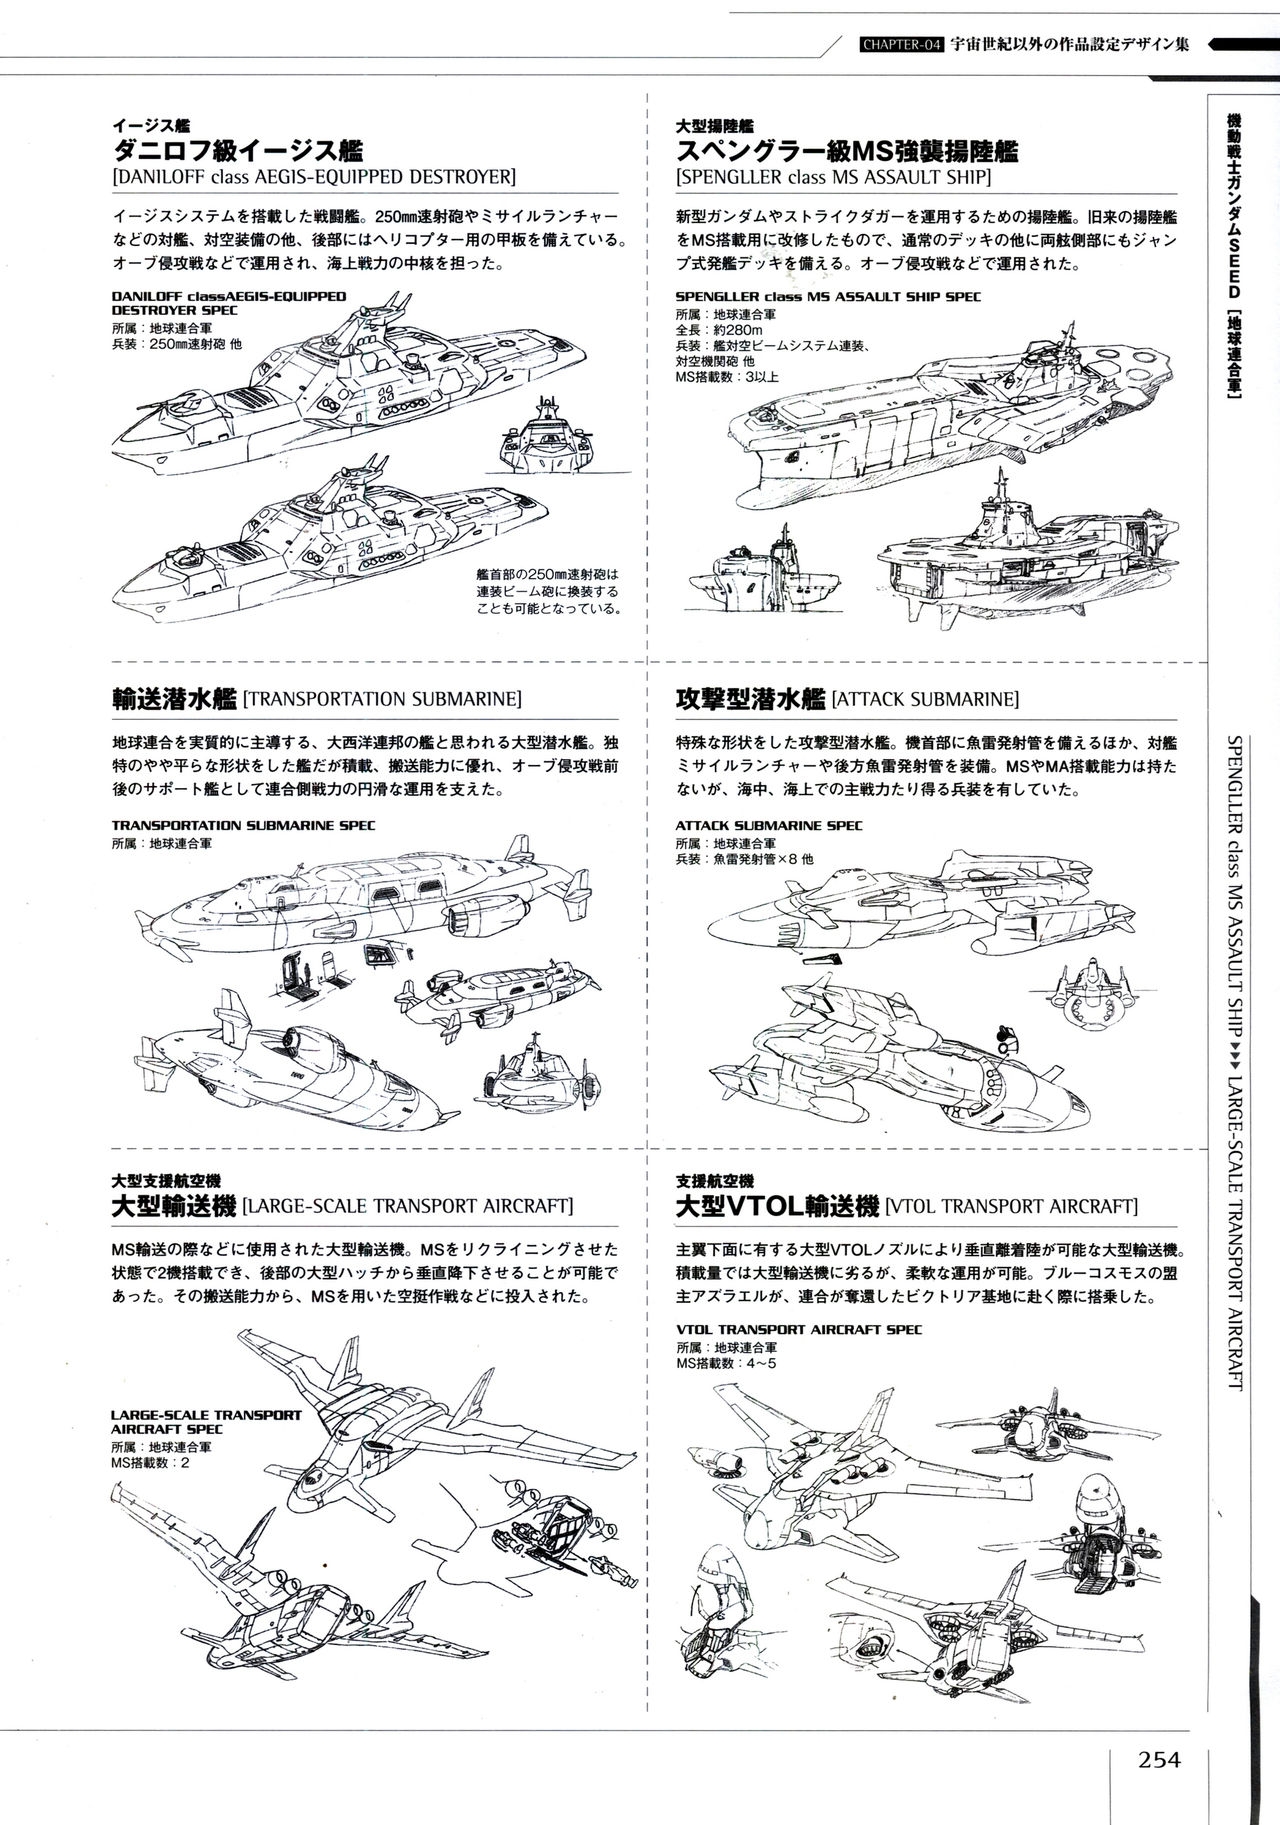 Mobile Suit Gundam - Ship & Aerospace Plane Encyclopedia - Revised Edition 259